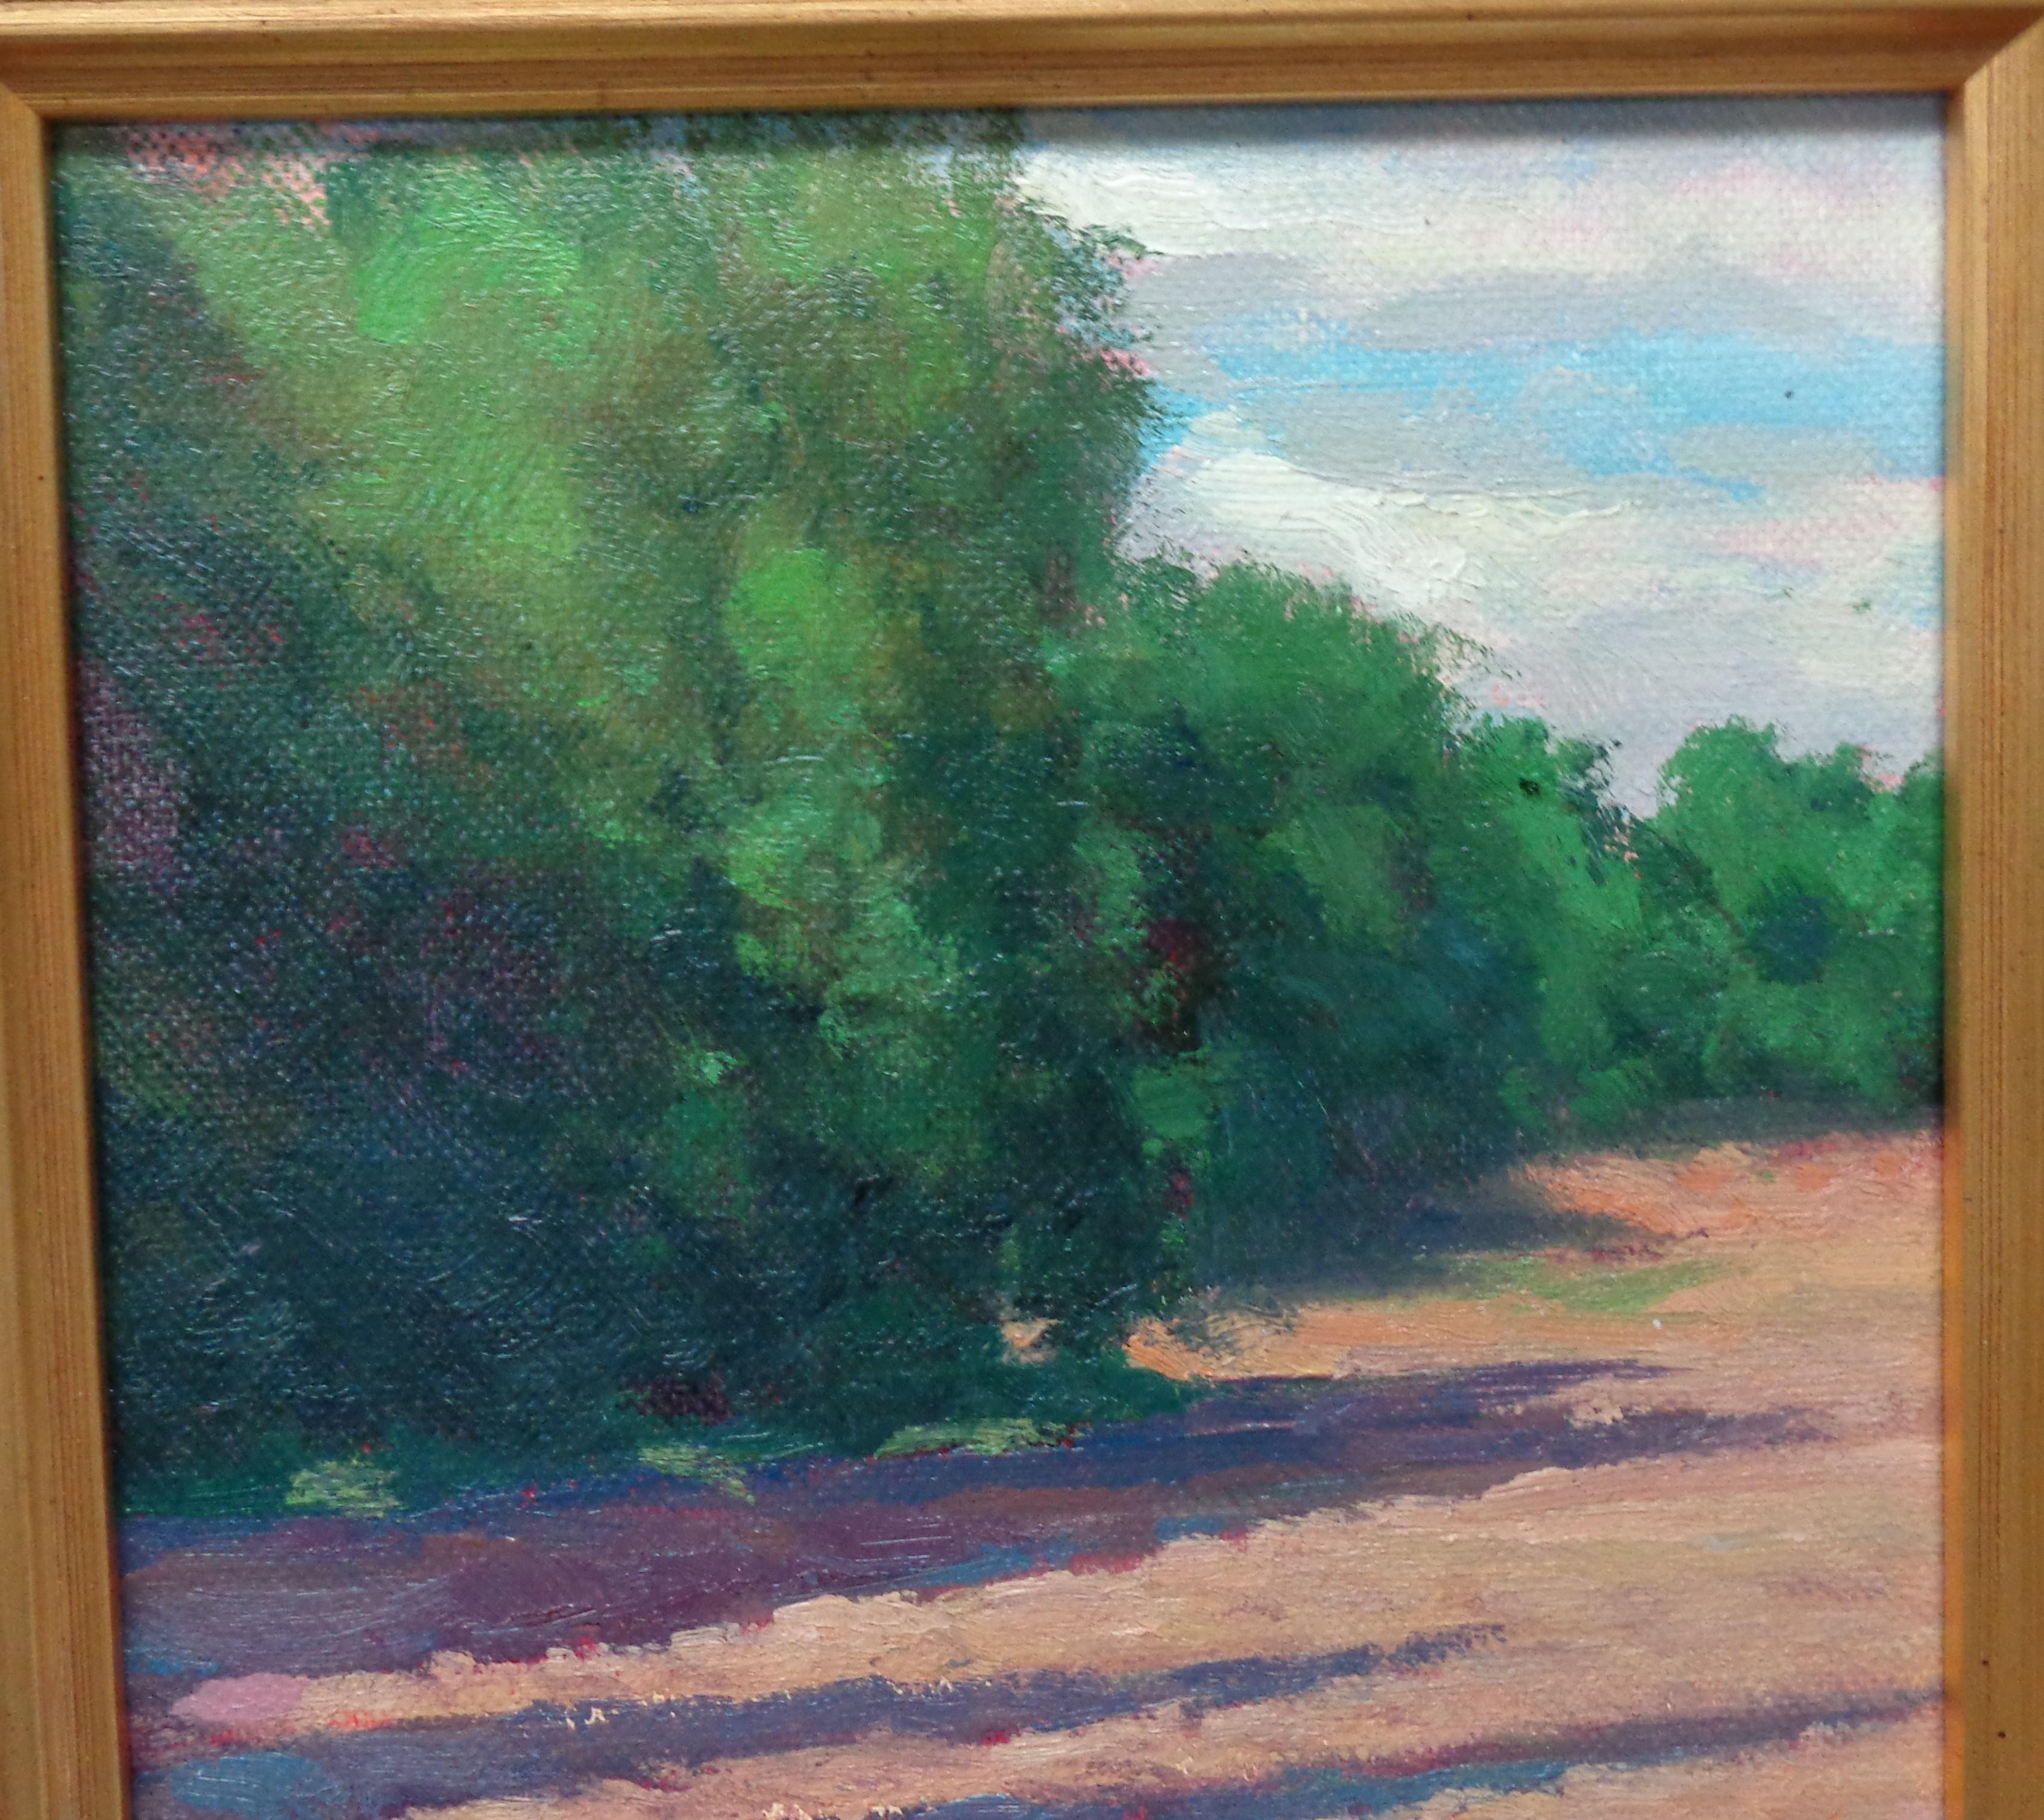  Impressionistic Rural Farm Landscape Oil Painting Michael Budden Shadow & Light For Sale 1